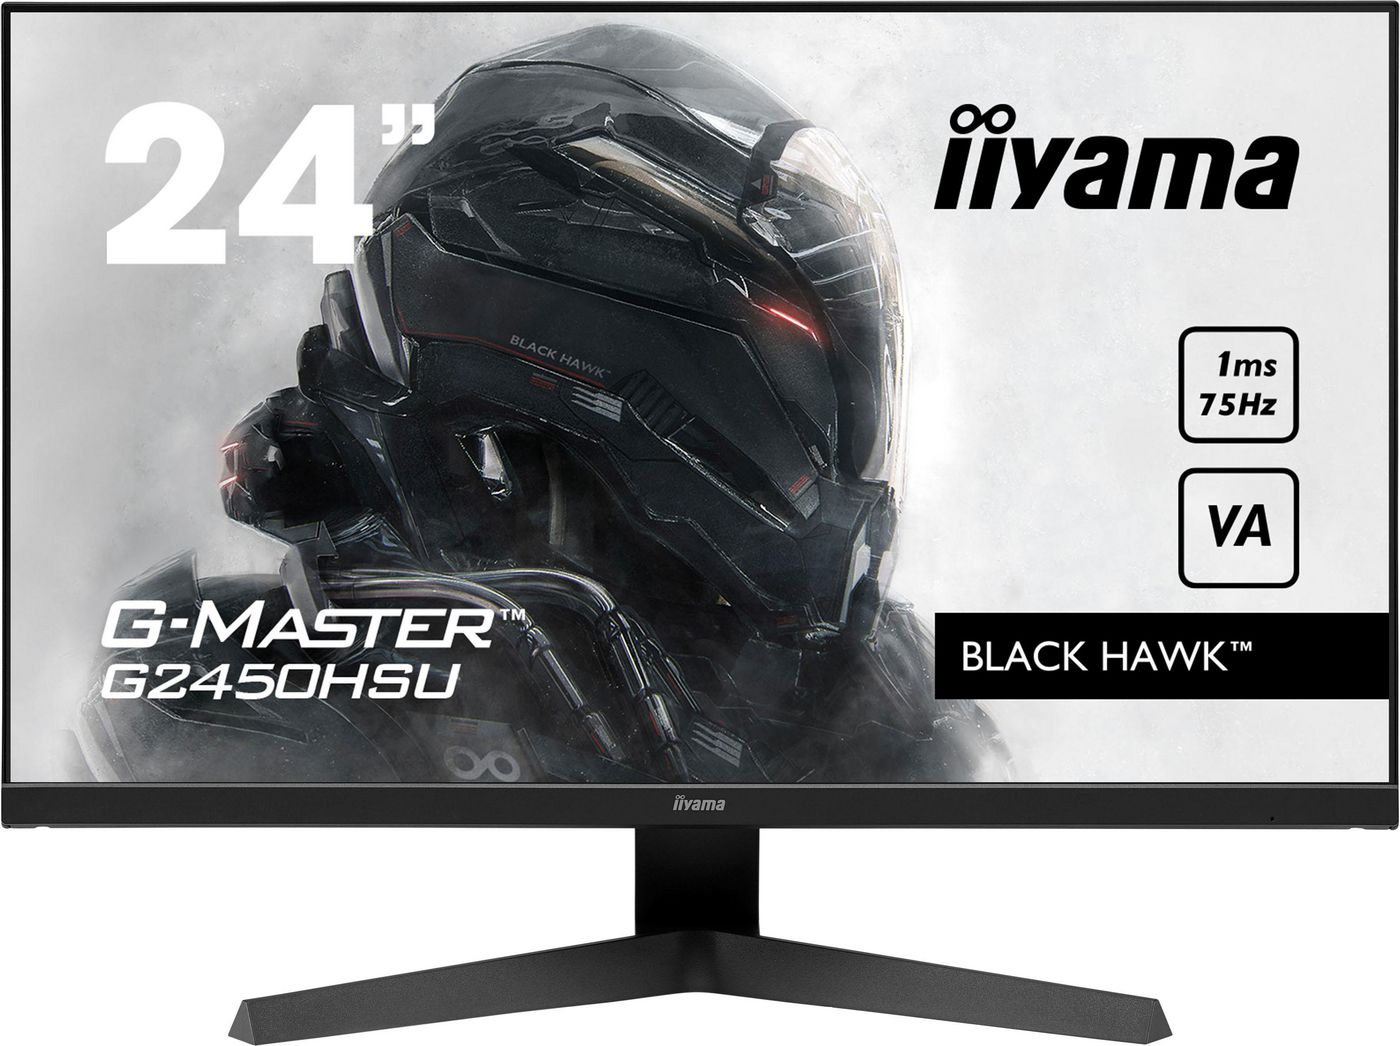 Desktop Monitor - G-MASTER G2450HSU-B1 - 24in - 1920x1080 (FHD) - Black